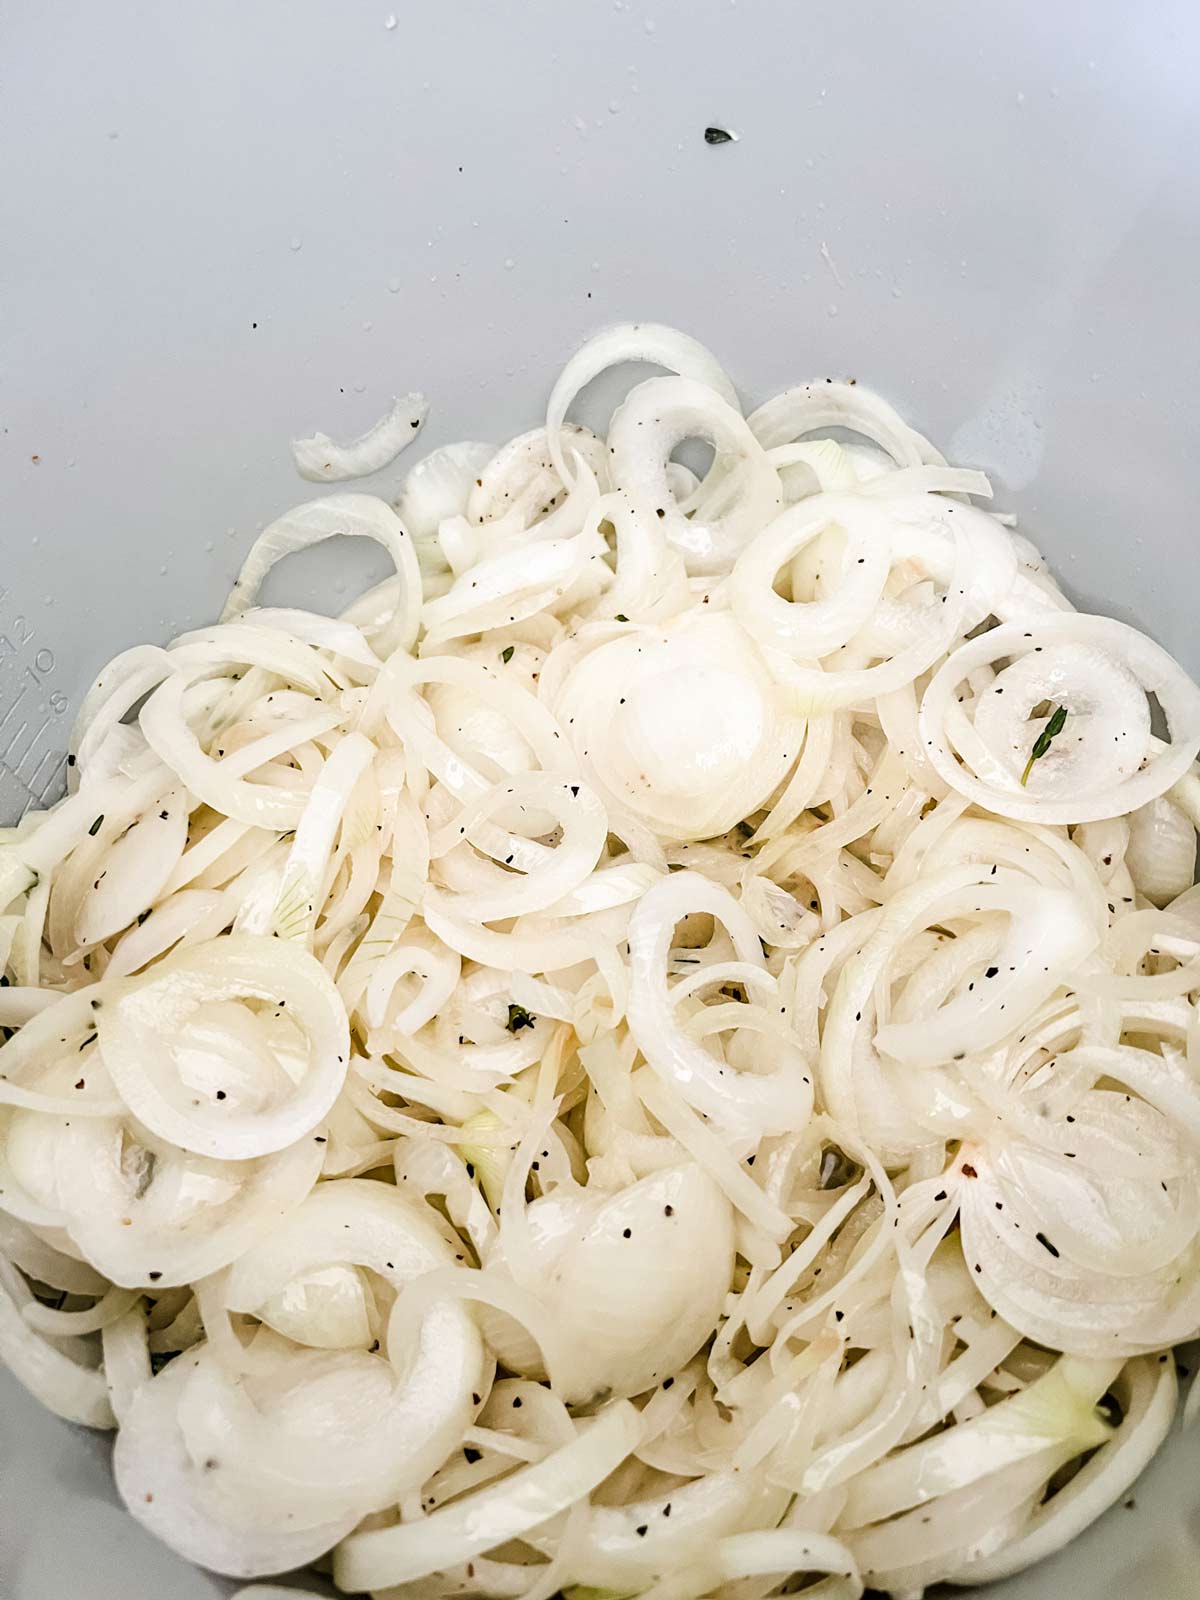 Onions and seasonings cooking in a Ninja Foodi.